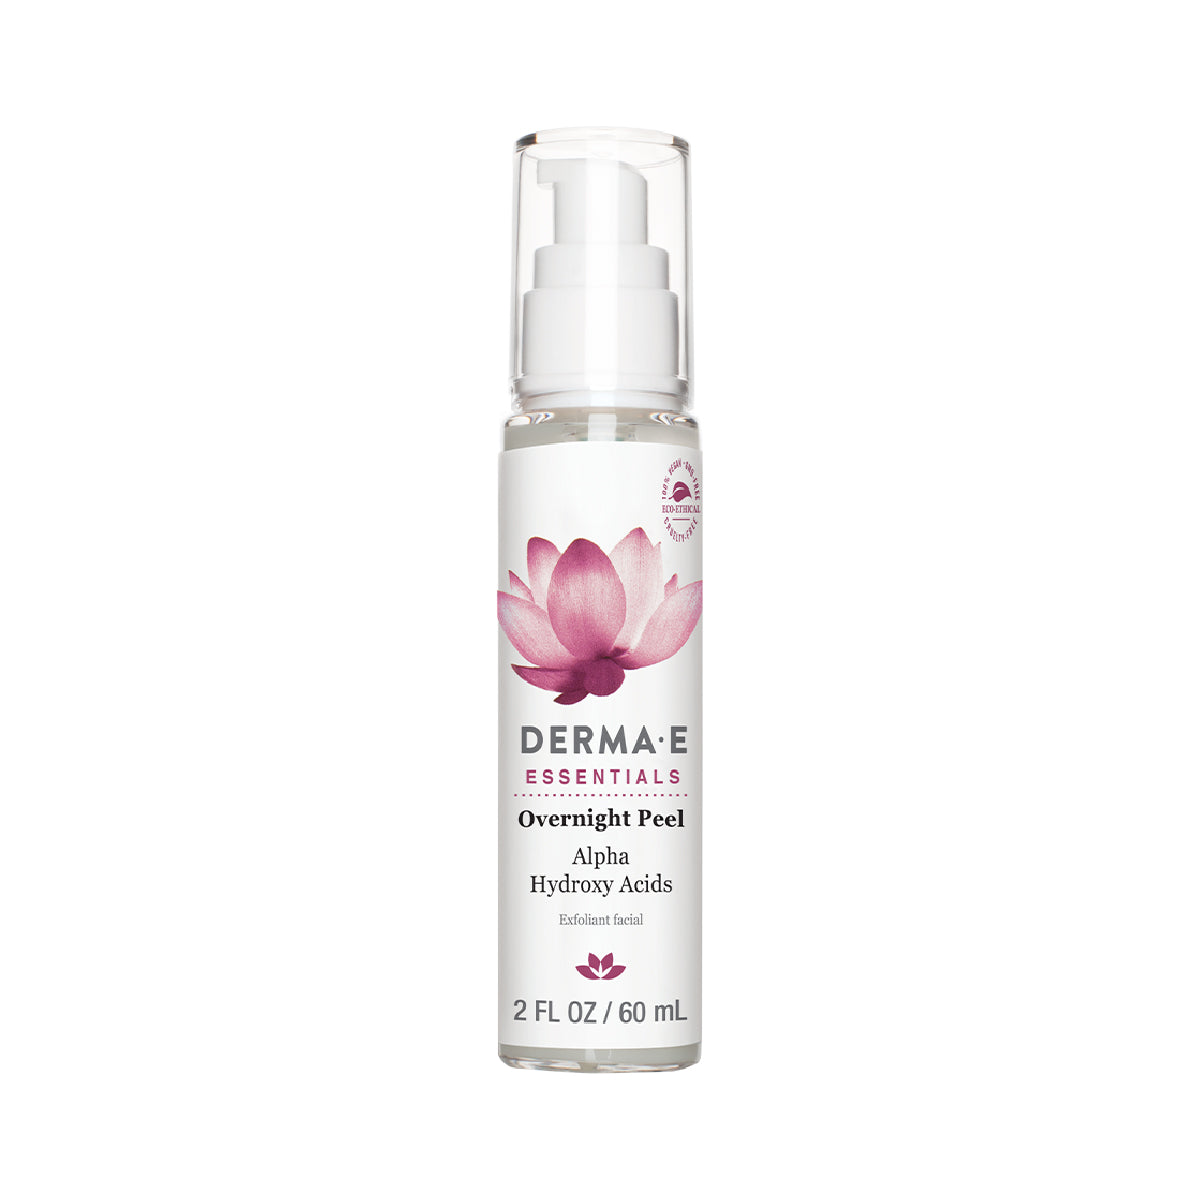 Derma-E Essentials Overnight Peel